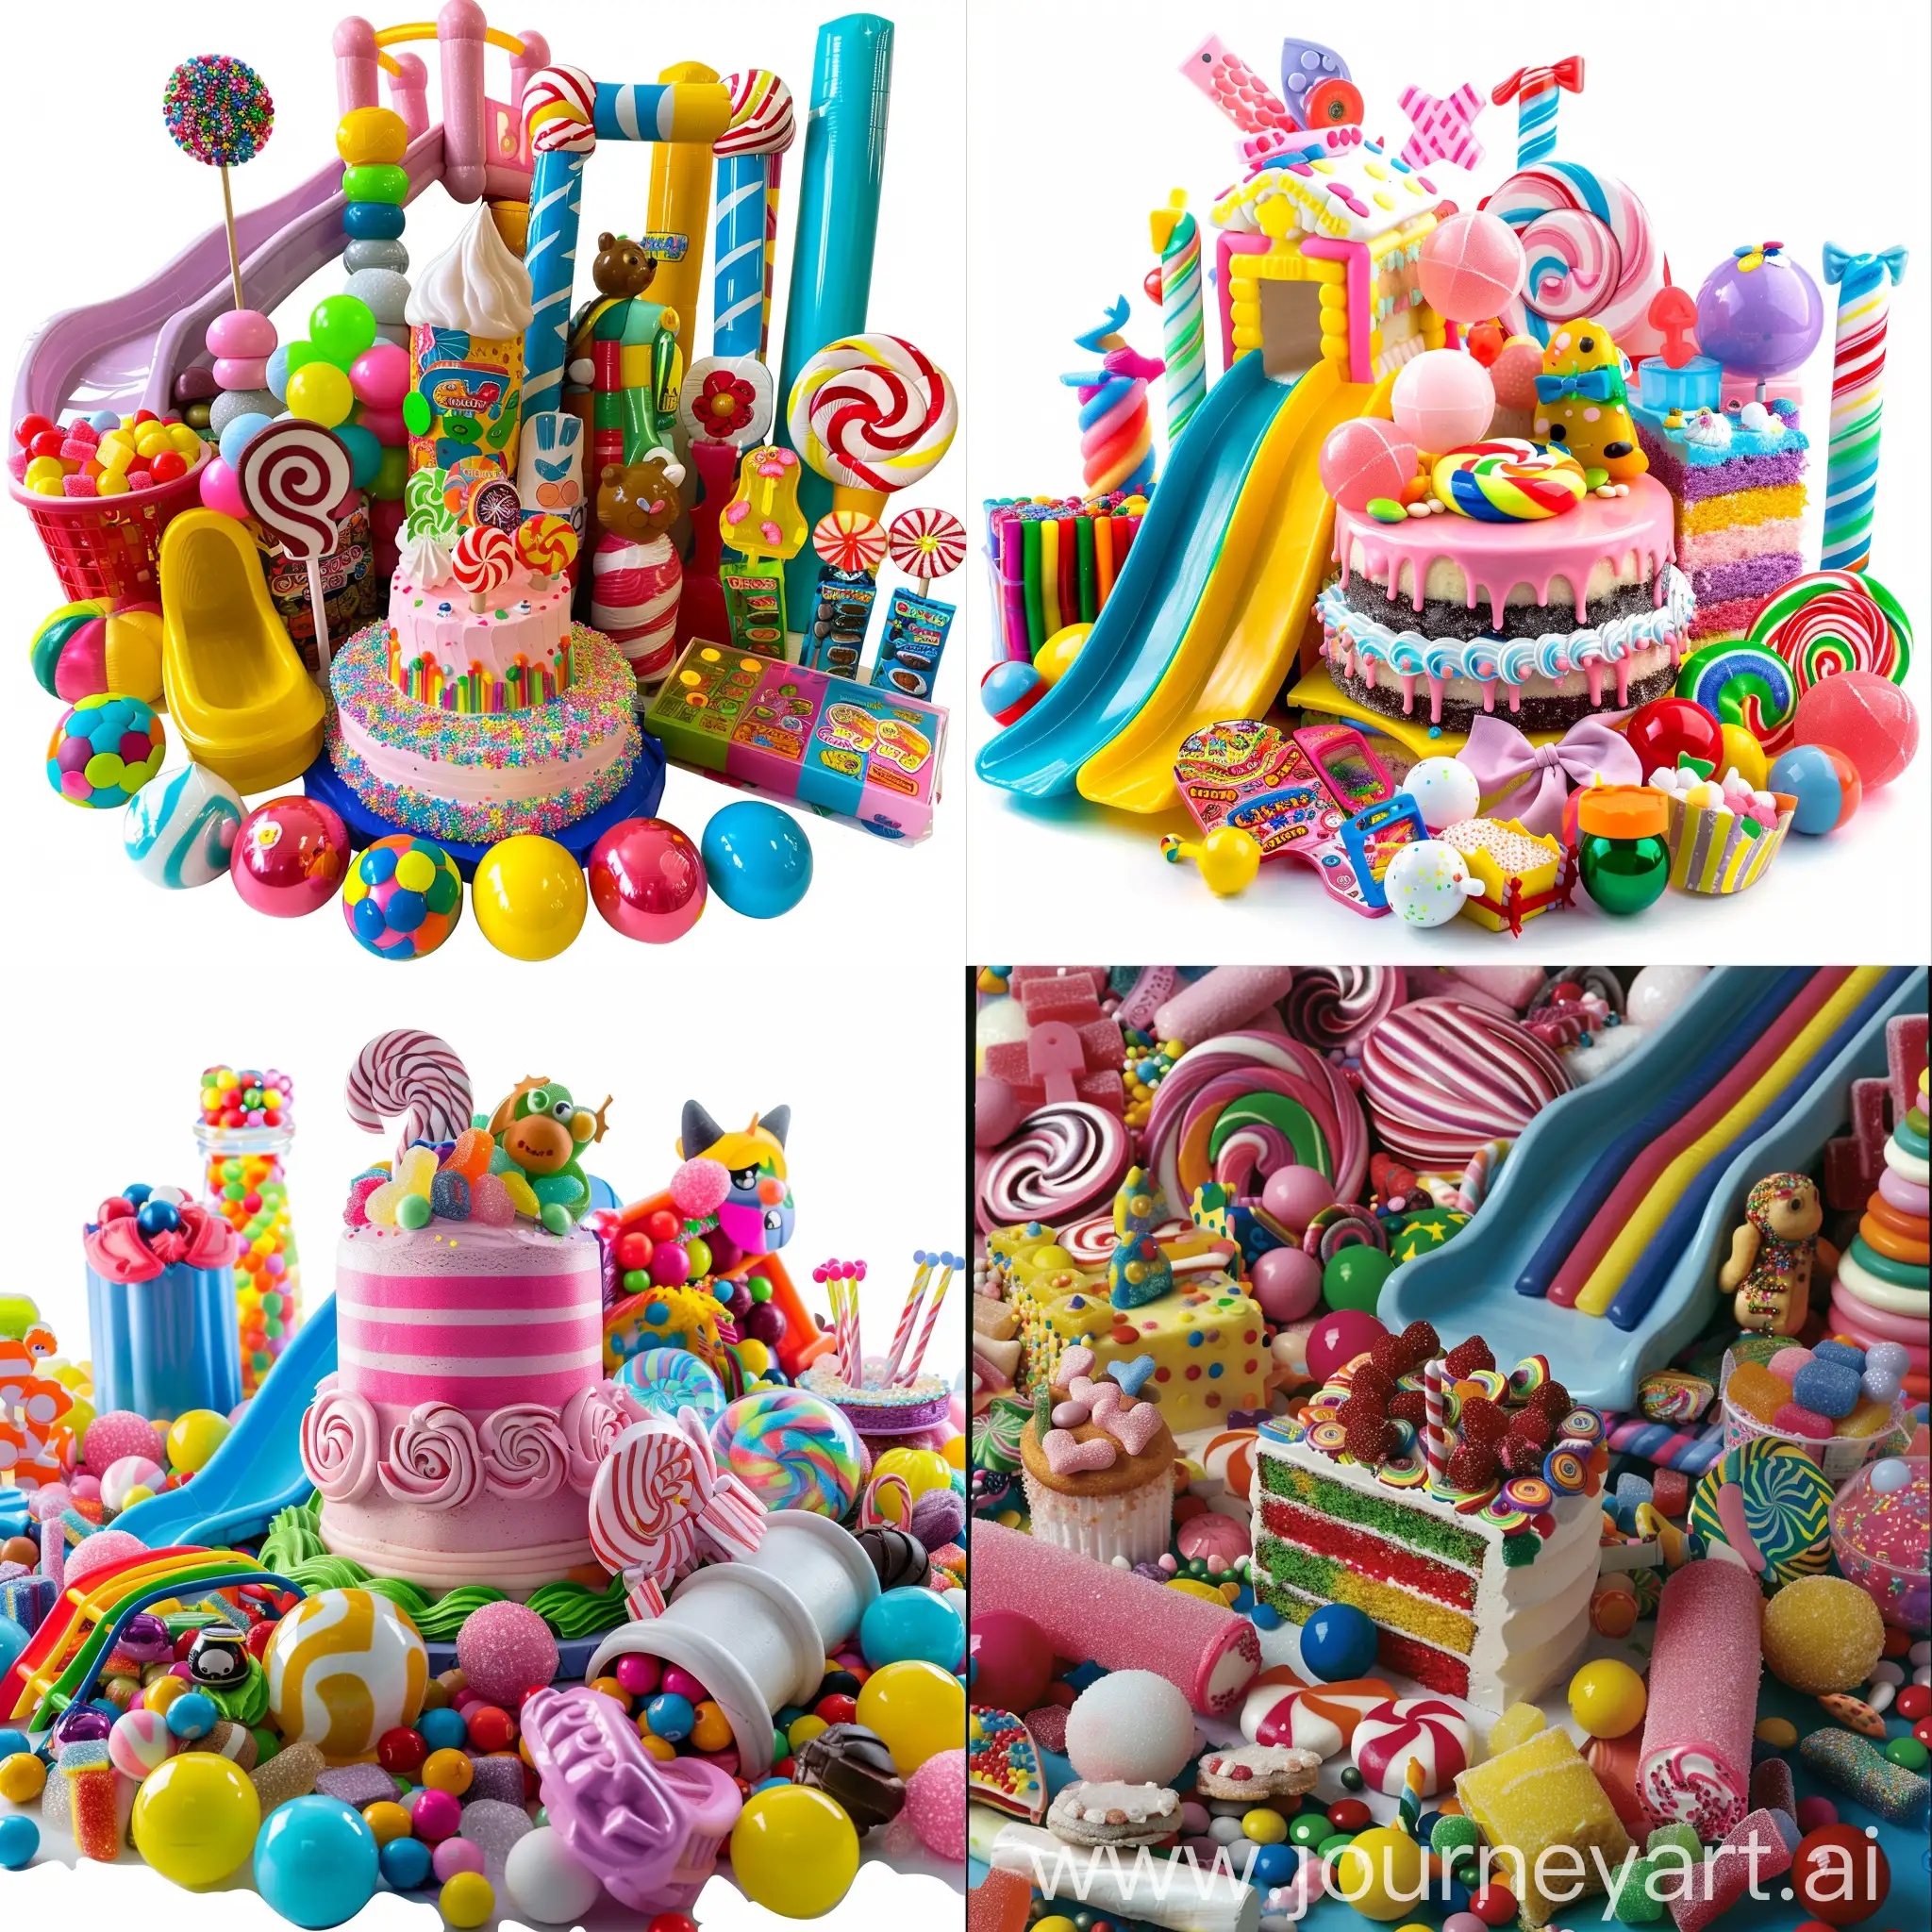 Vibrant-Playtime-Kids-Enjoying-Candy-Cake-Games-Balls-Slide-and-Bicycles